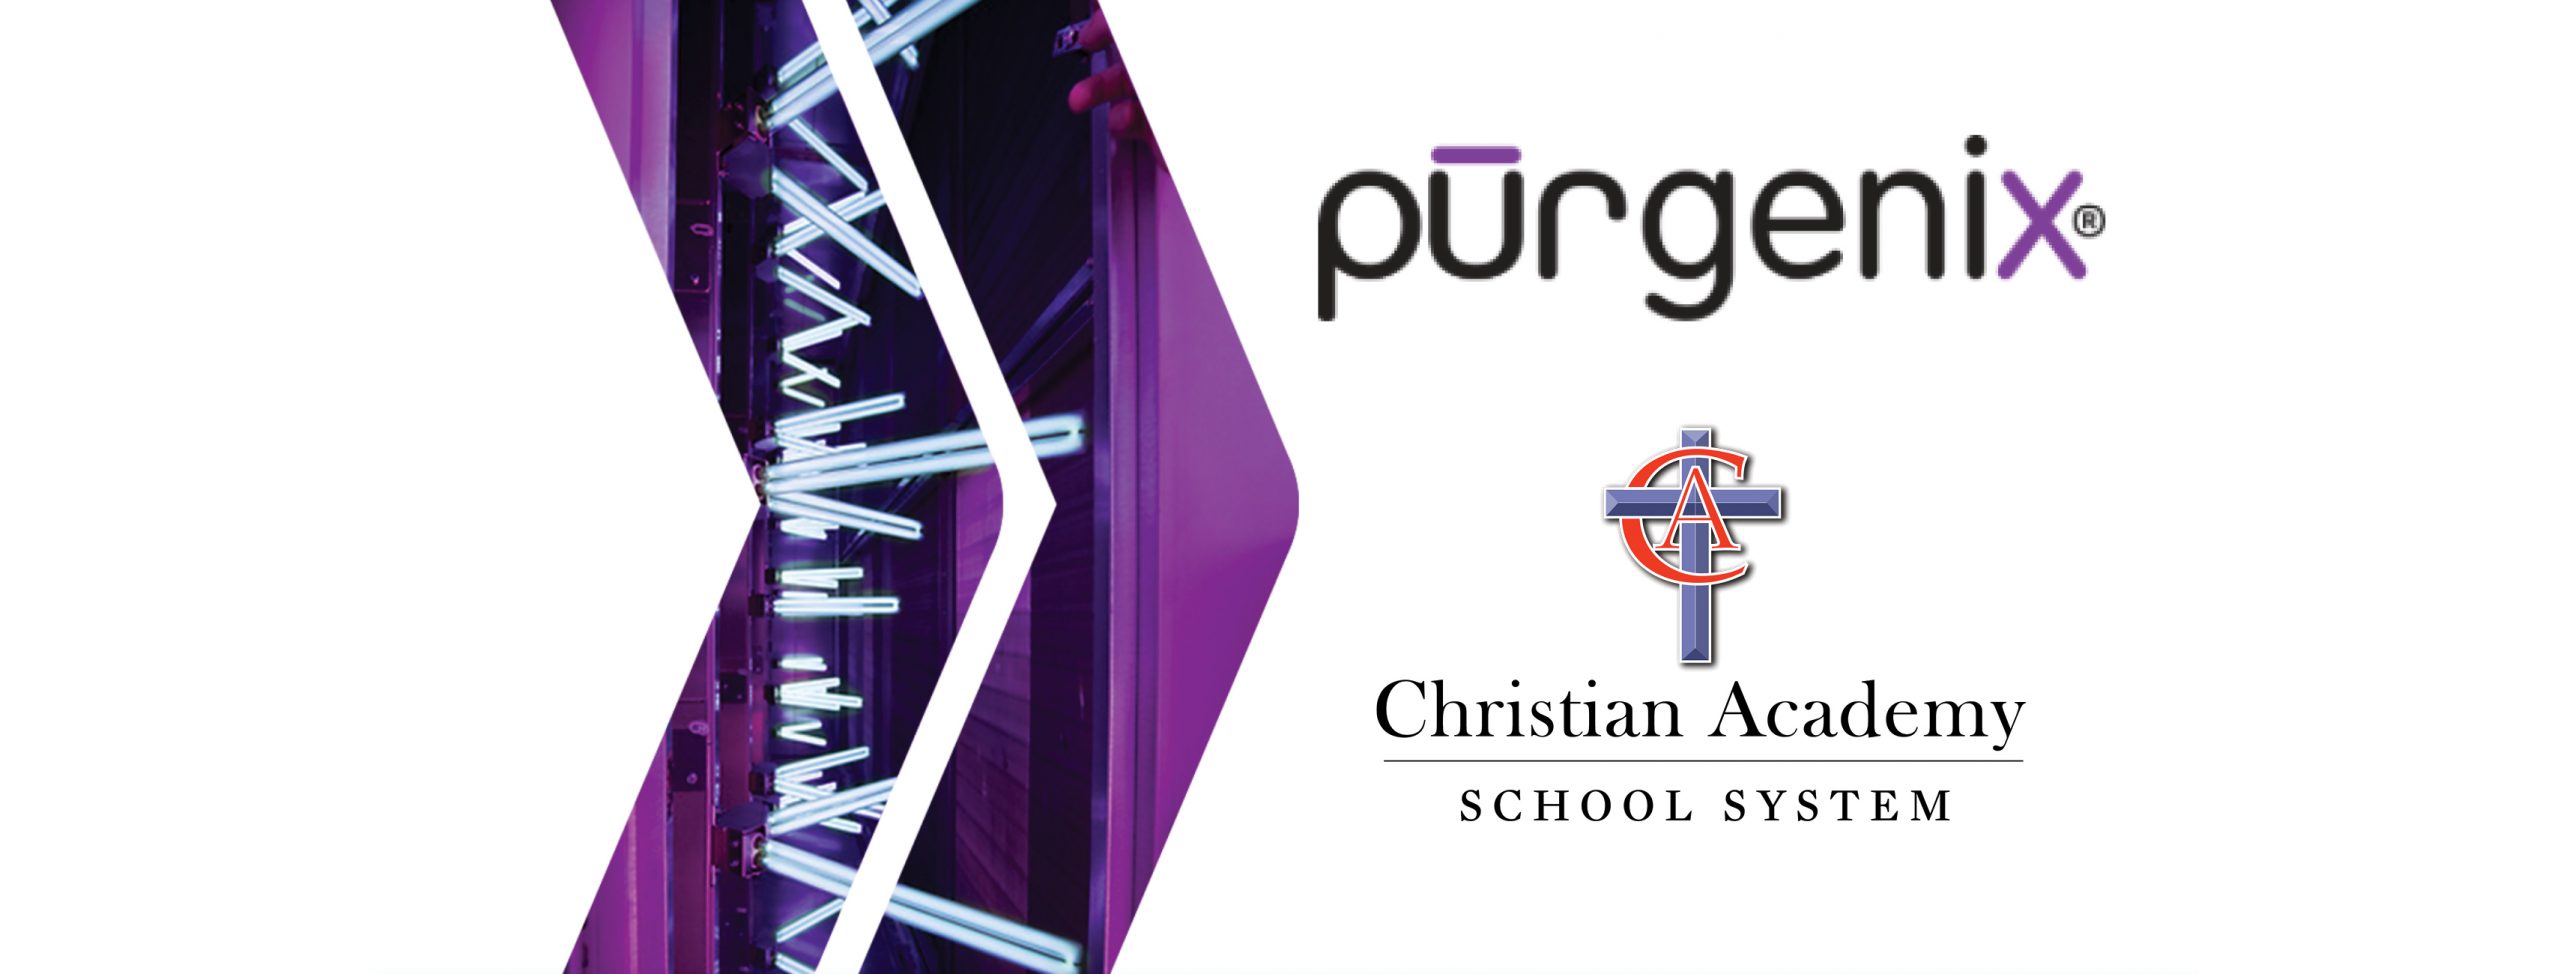 Christian Academy School System | purGenix